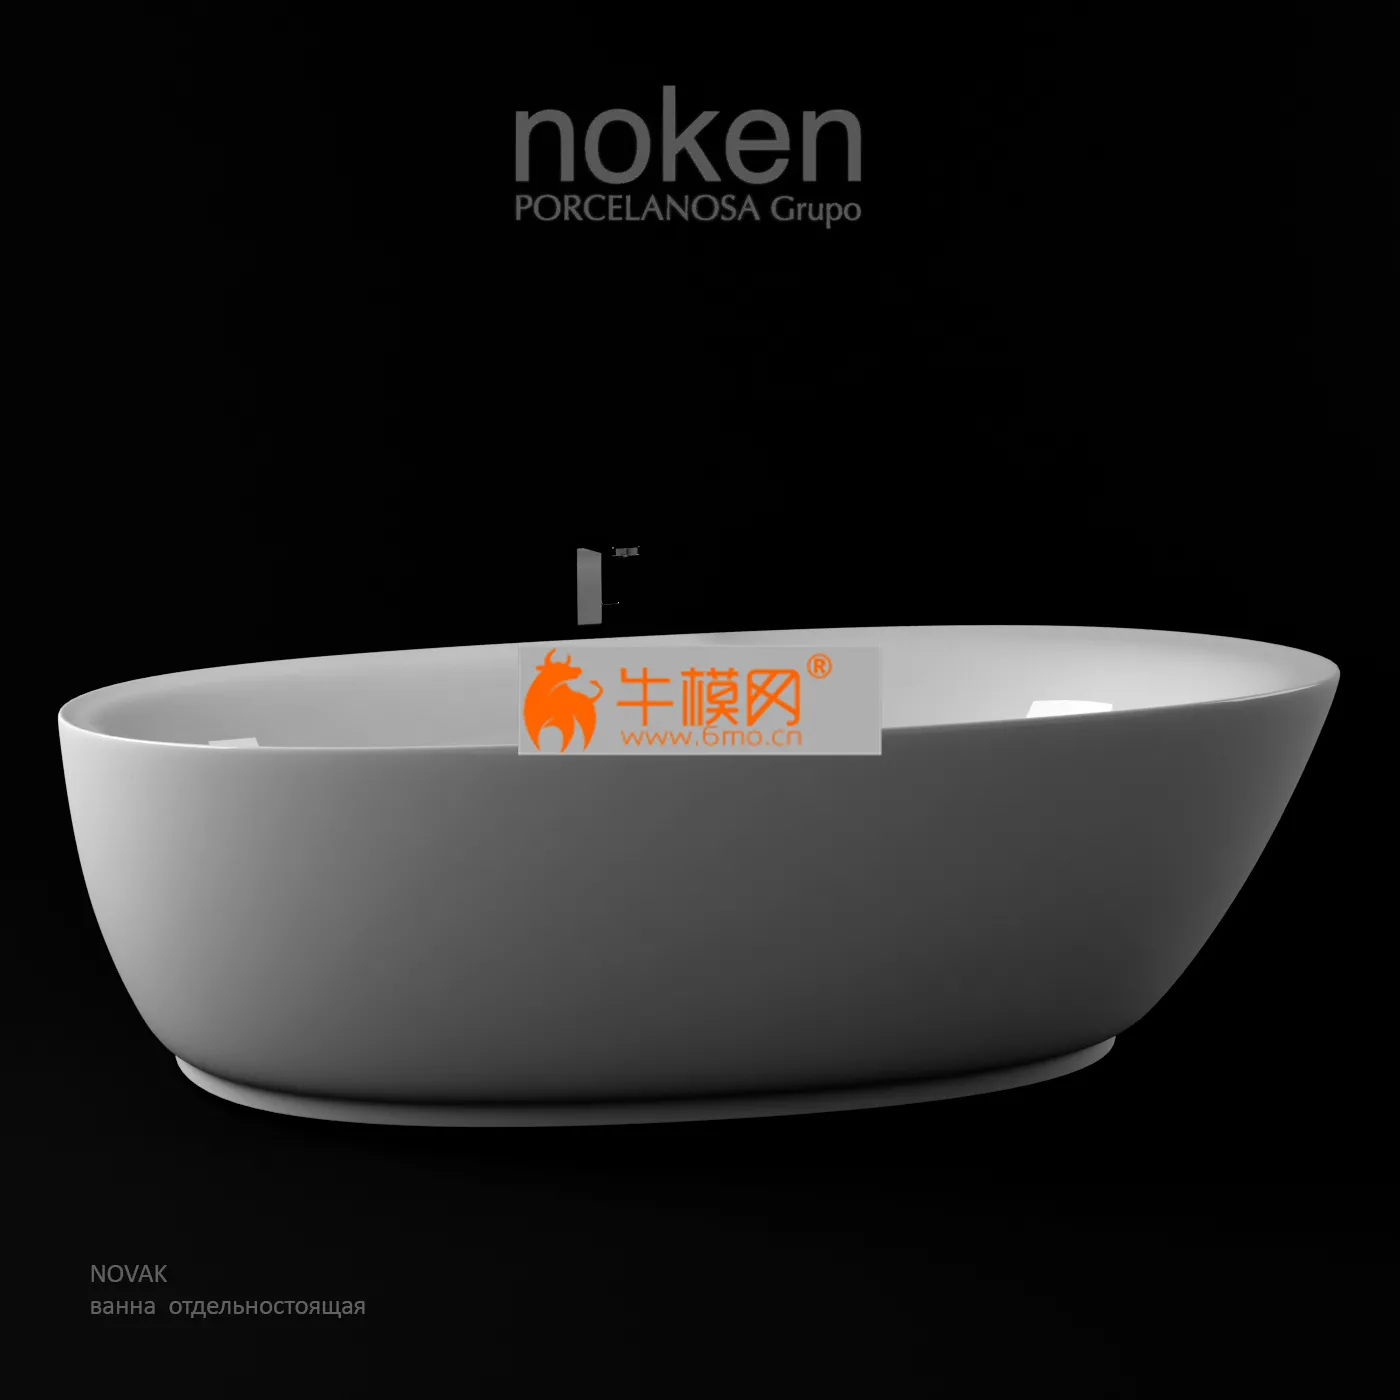 NOVAK bathtub freestanding Noken – 3578